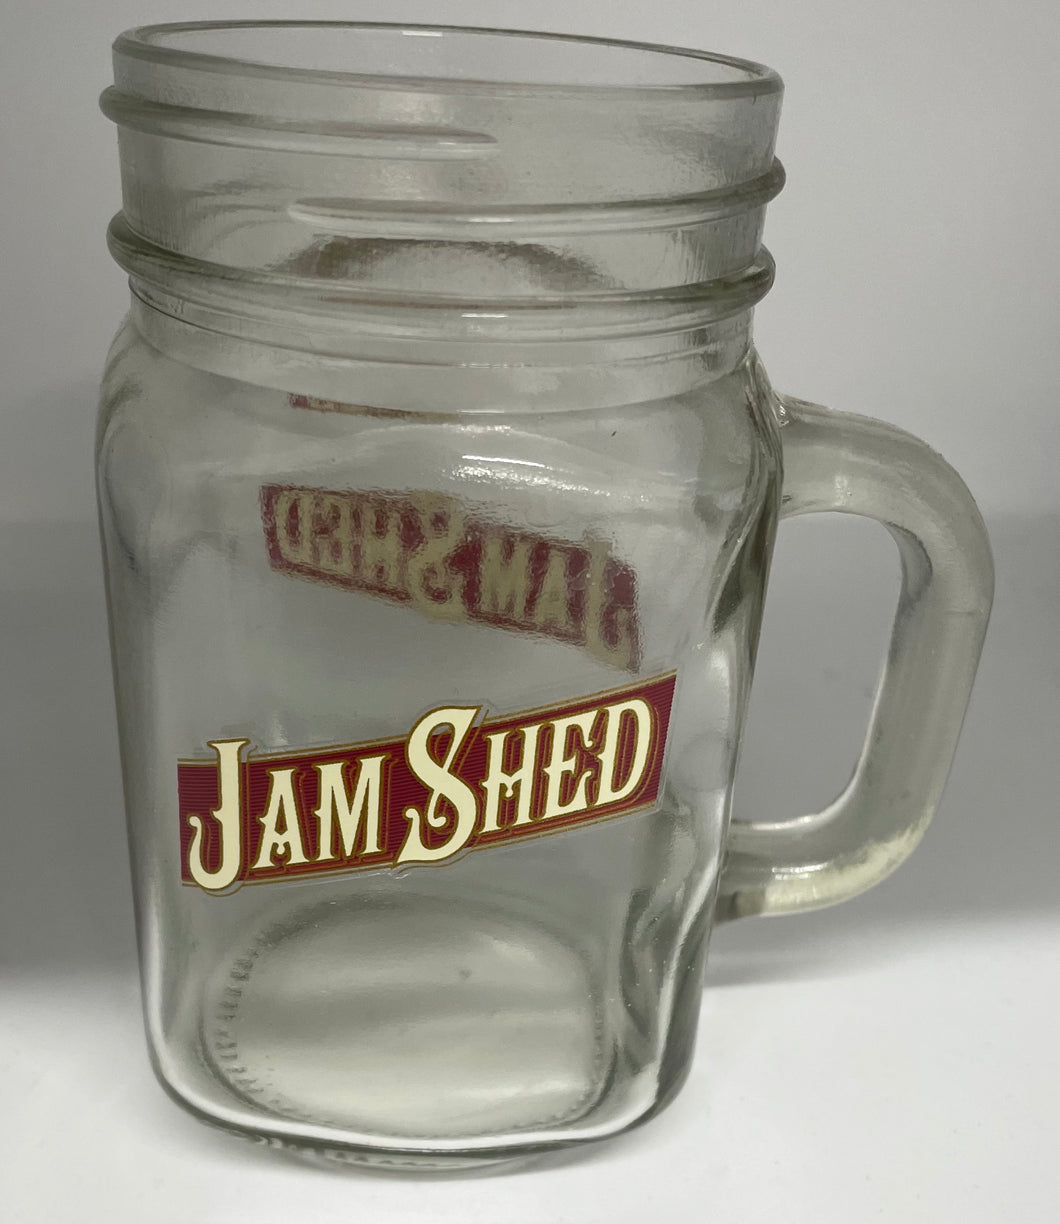 Jam Shed Wine Mason Jar Glass